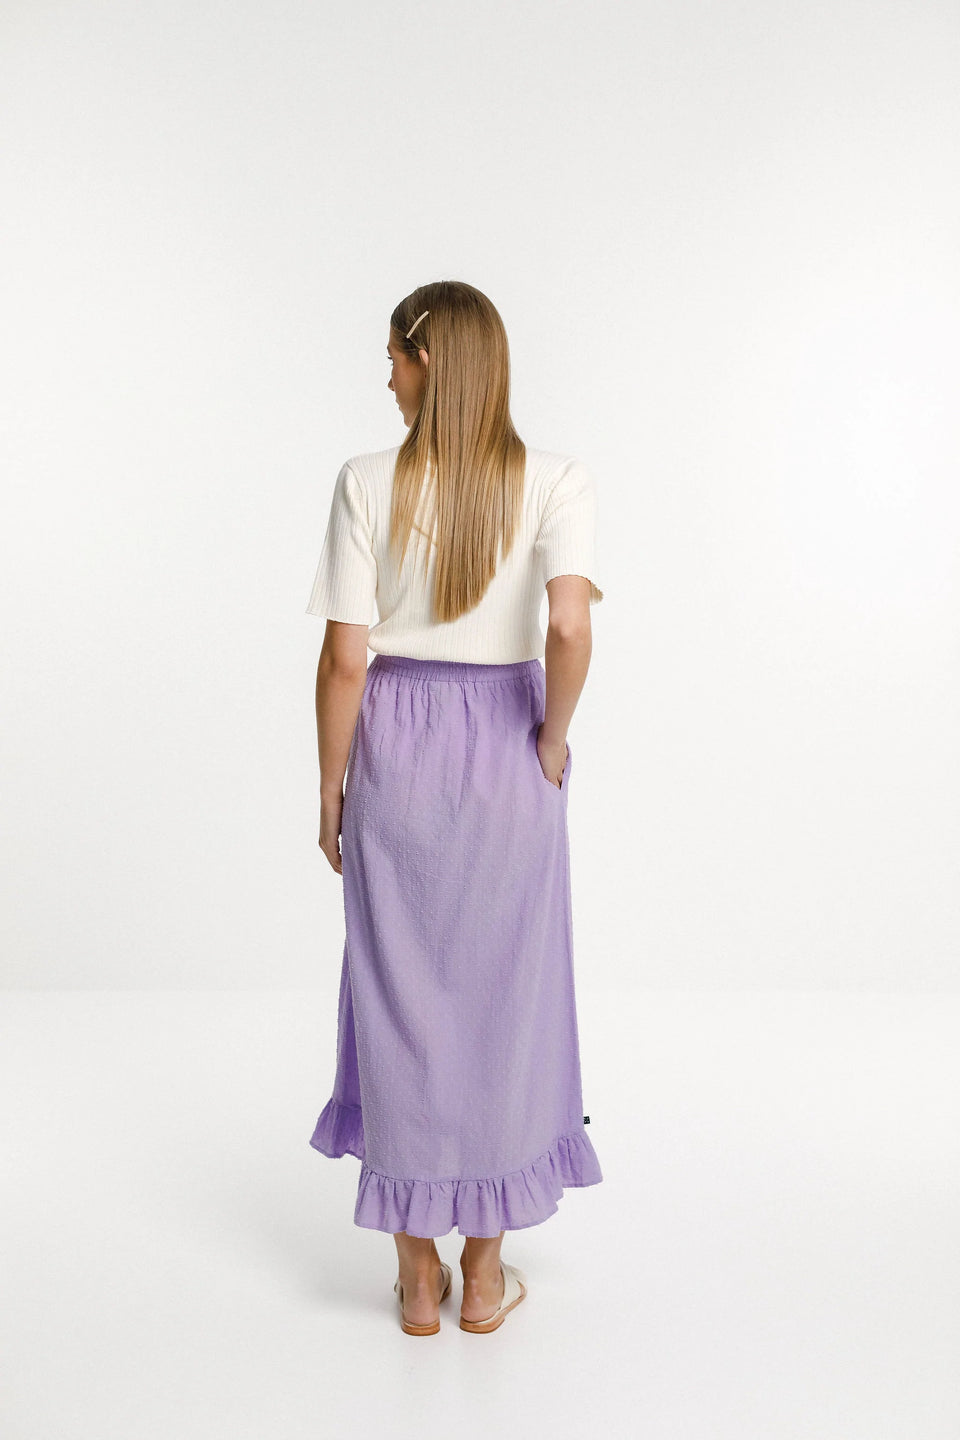 Thing Thing Belle Skirt - Purple Rose